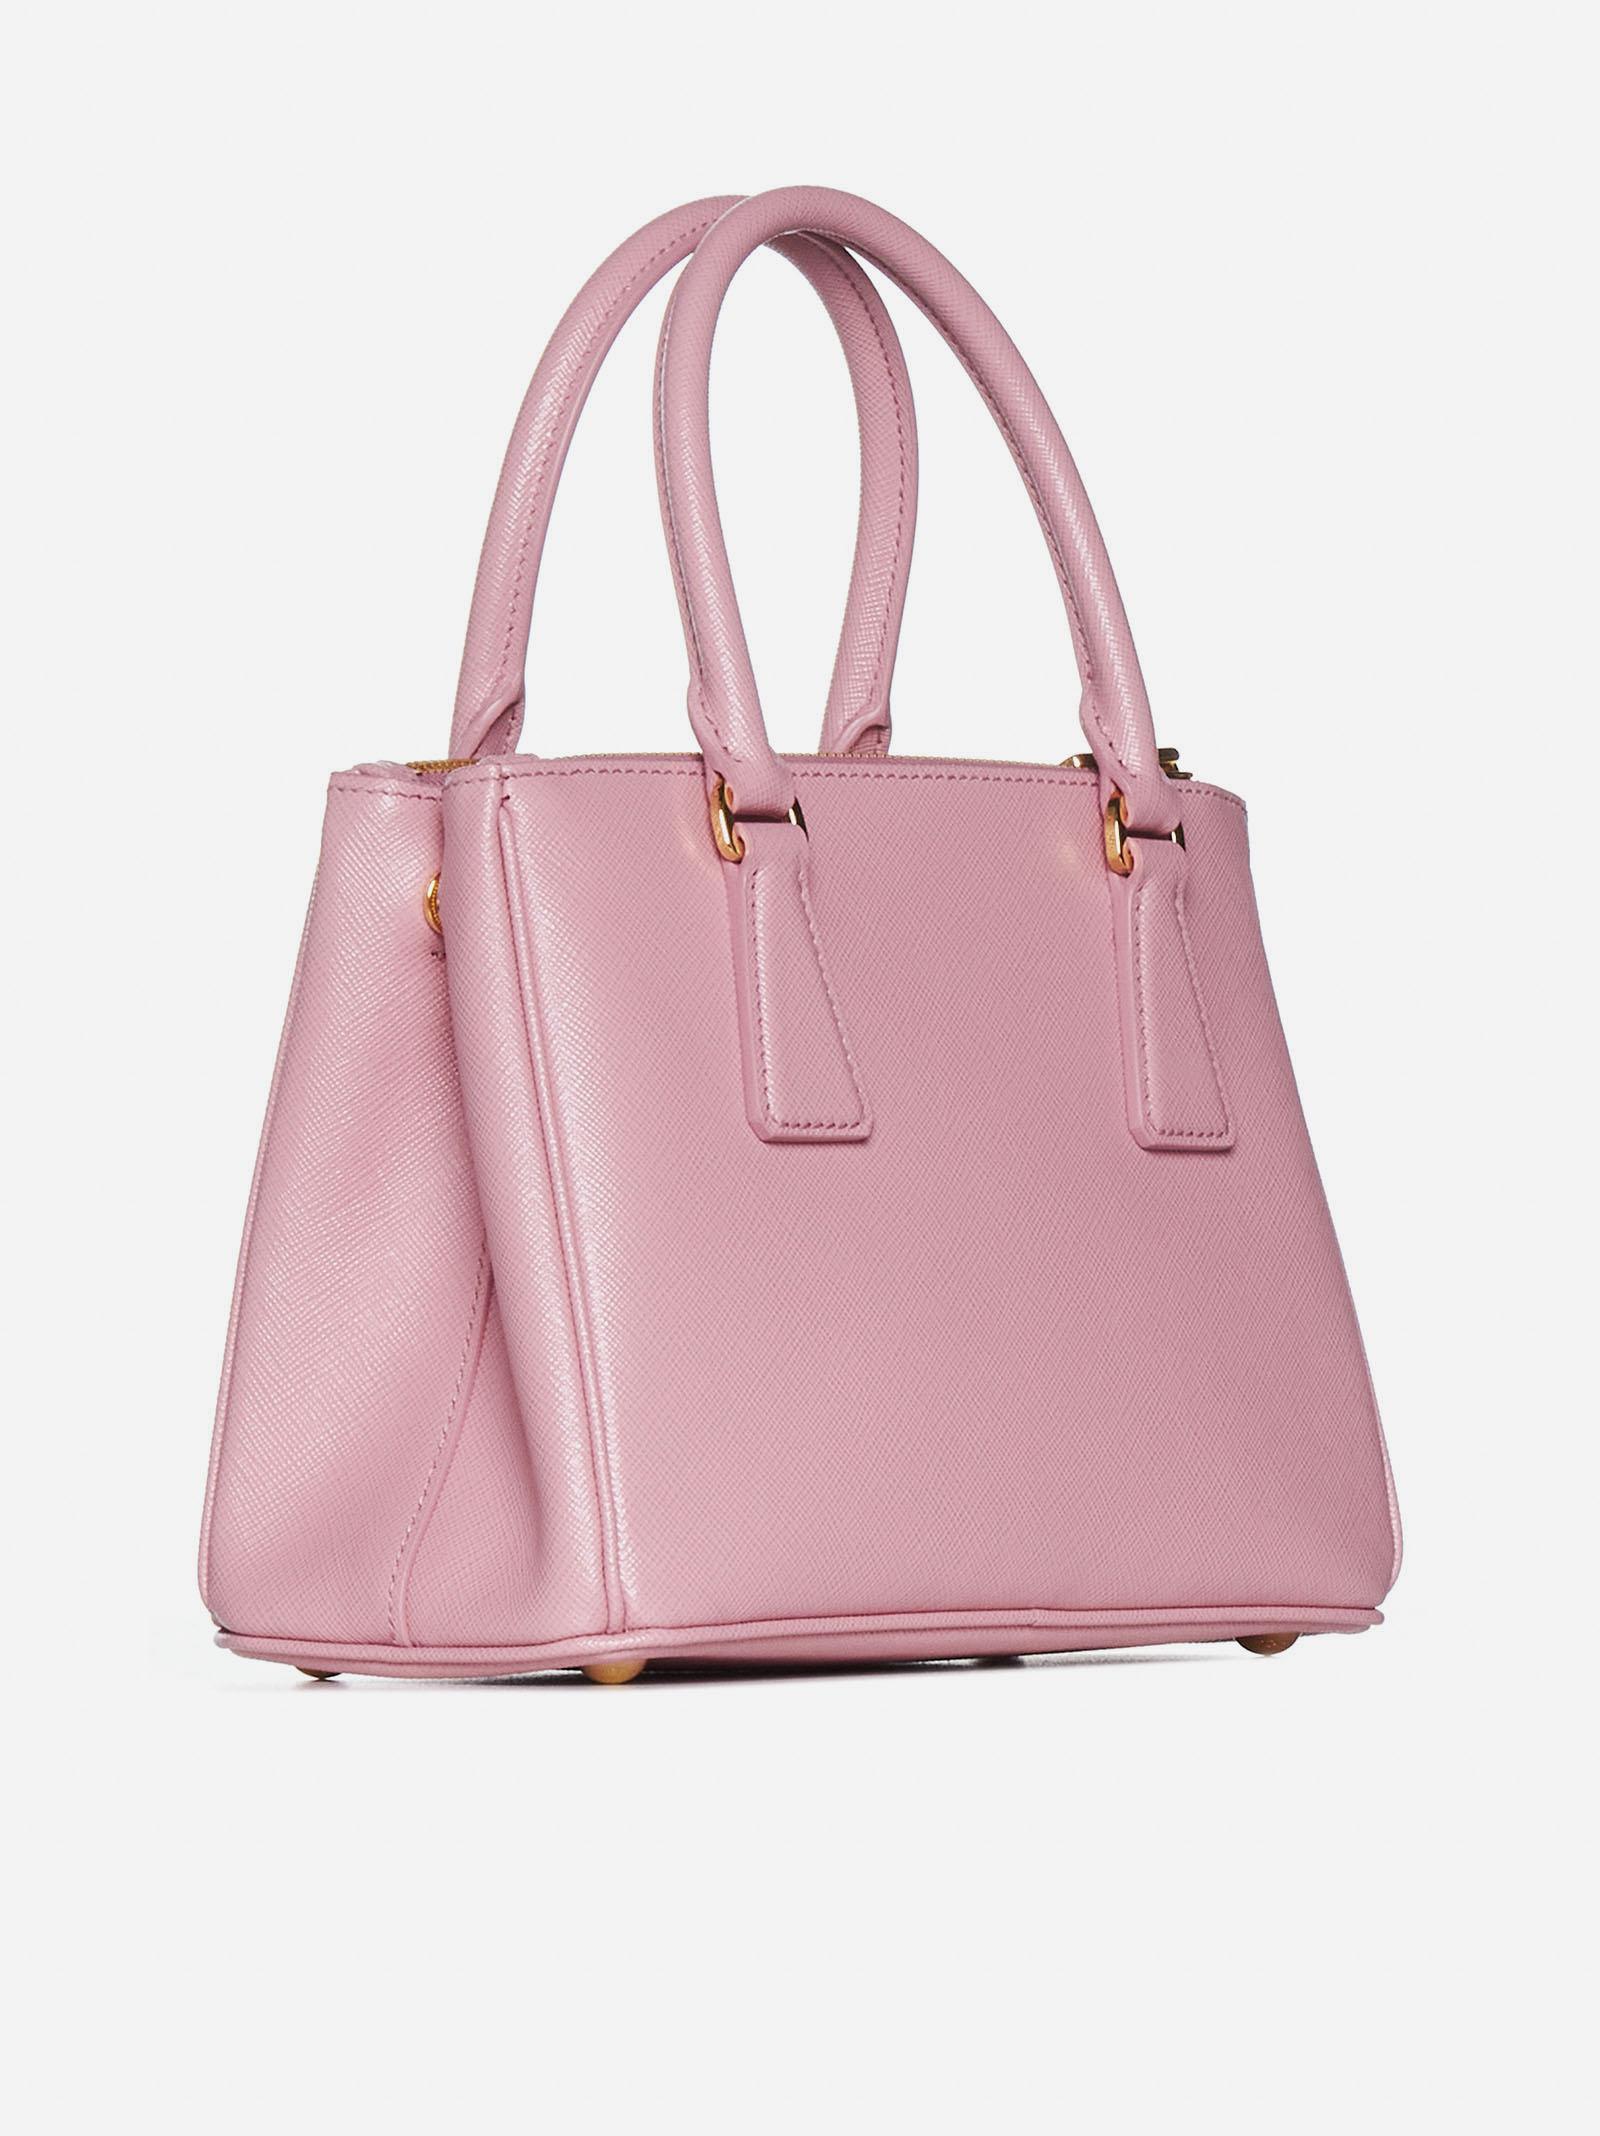 Prada Galleria Small Saffiano Leather Bag in Pink | Lyst